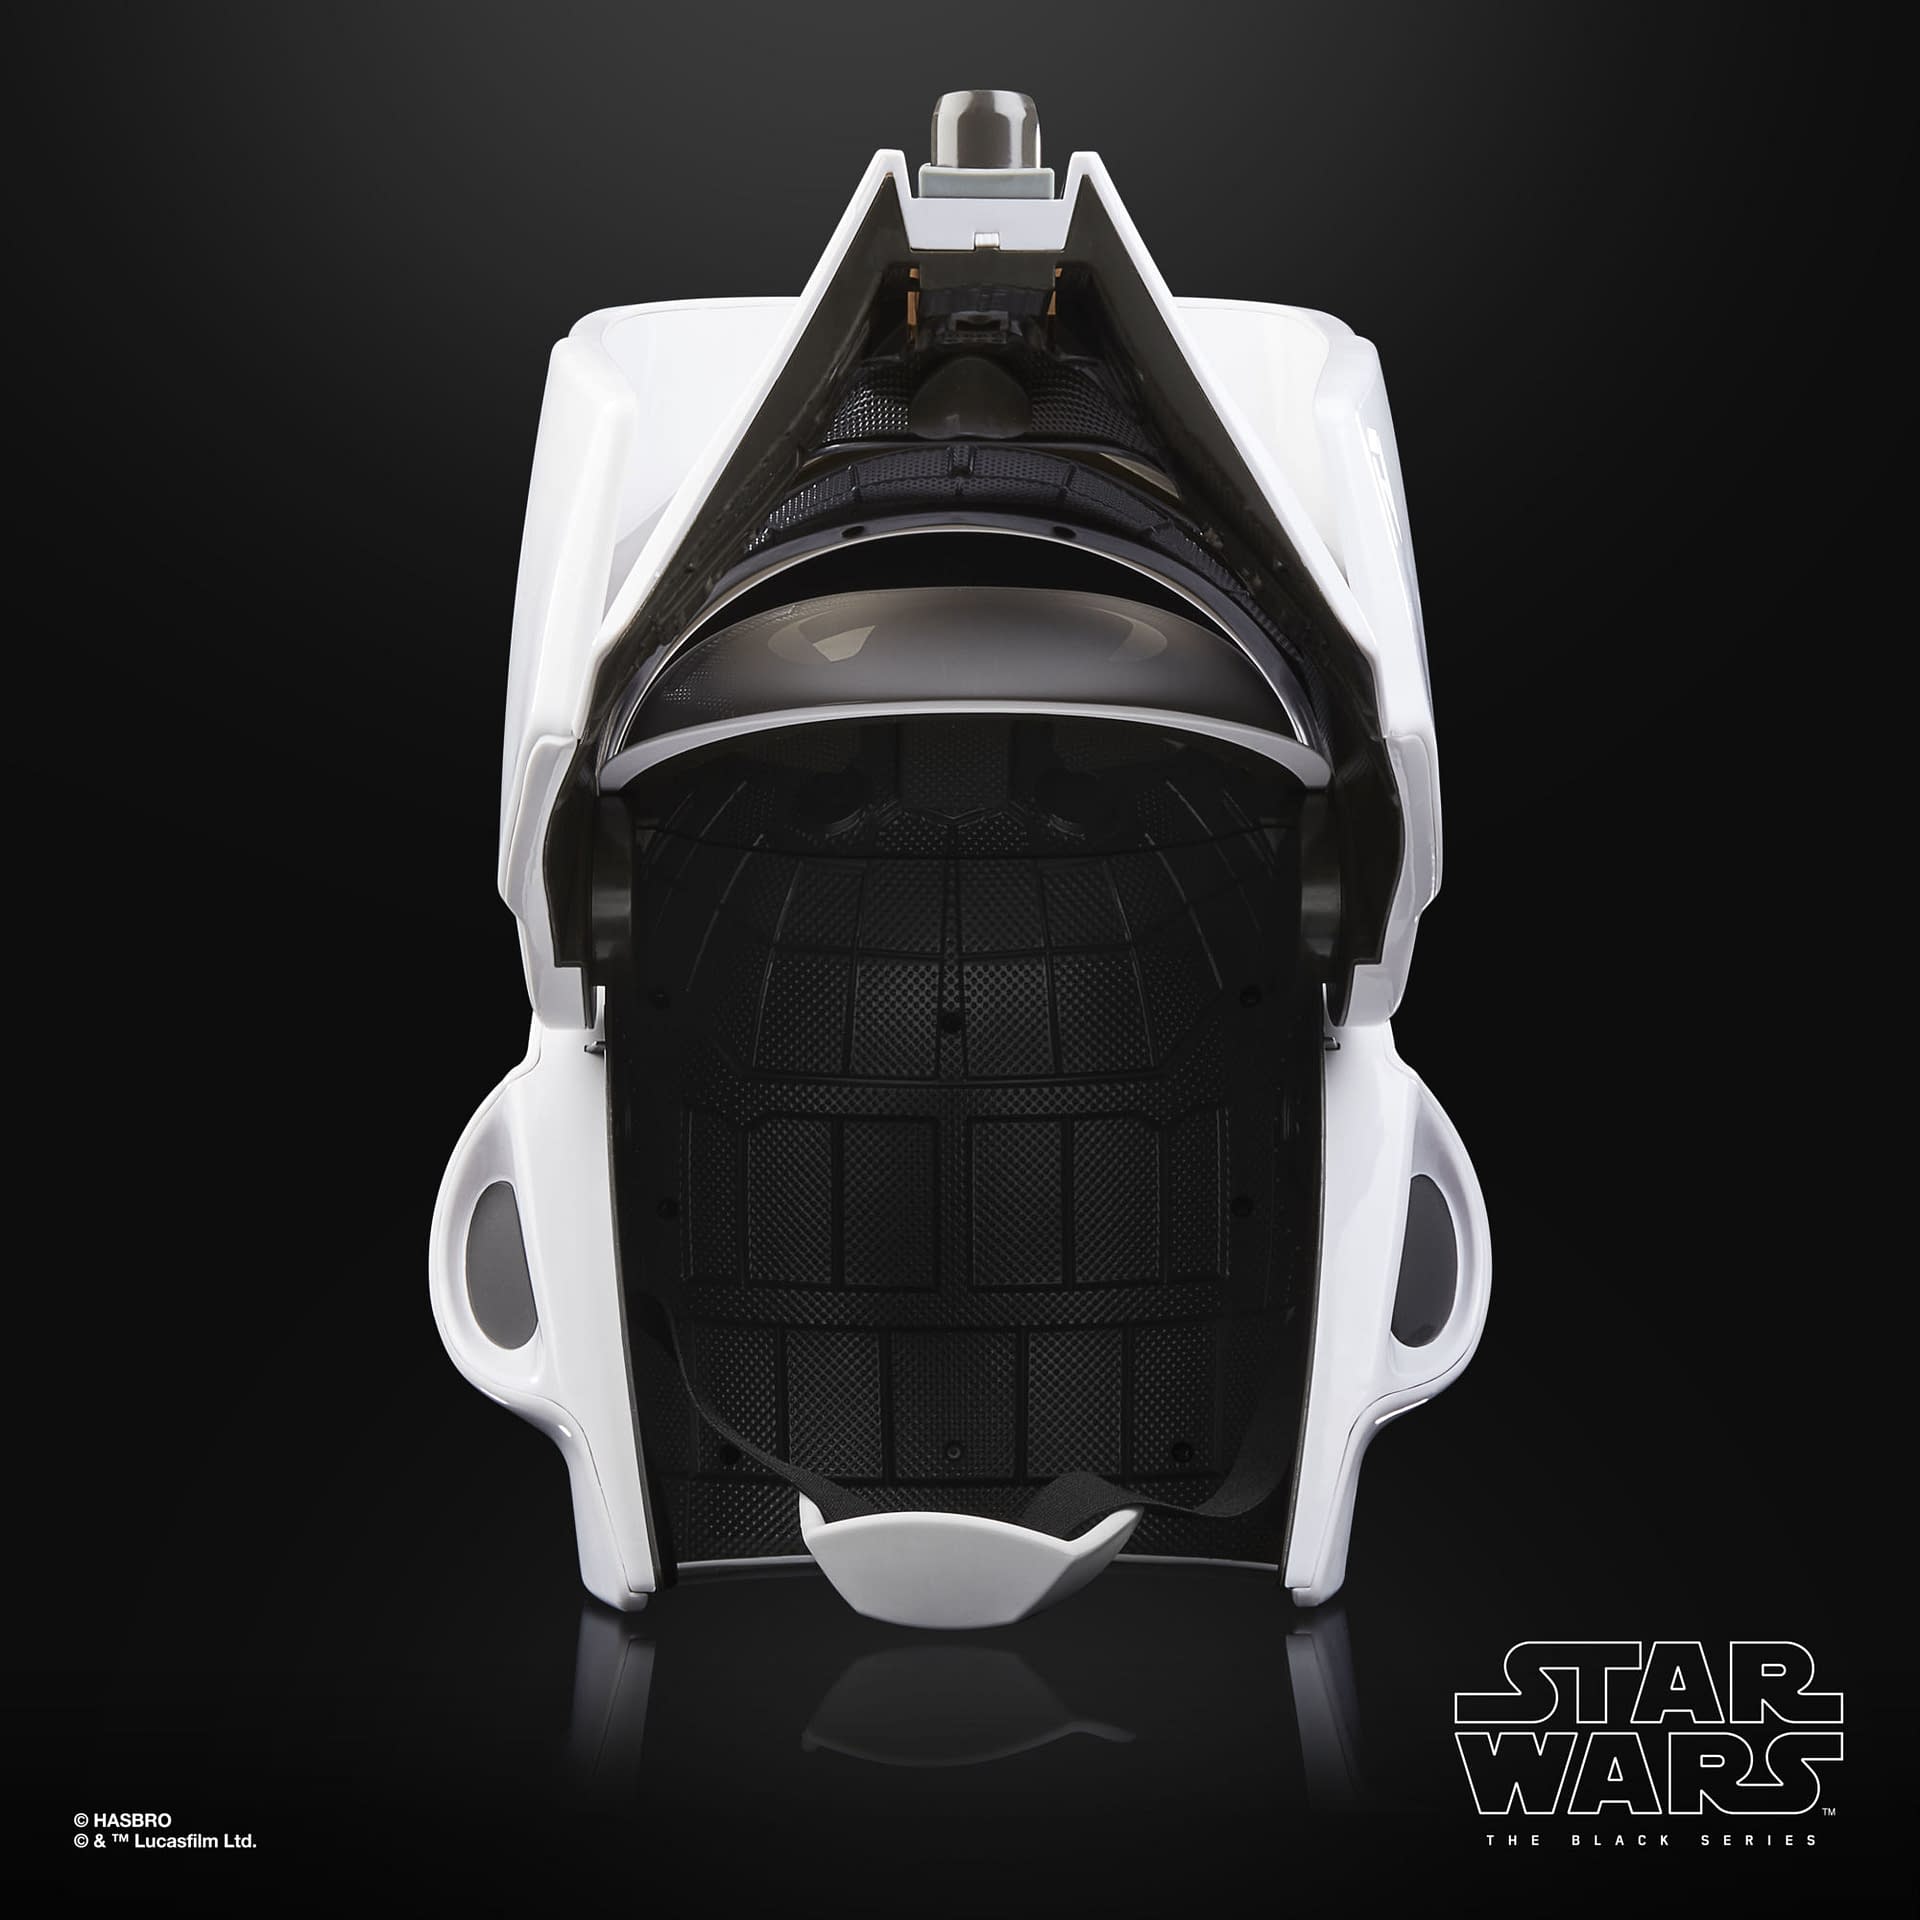 Star Wars Replica Scout Trooper Helmet Deploying Soon from Hasbro 